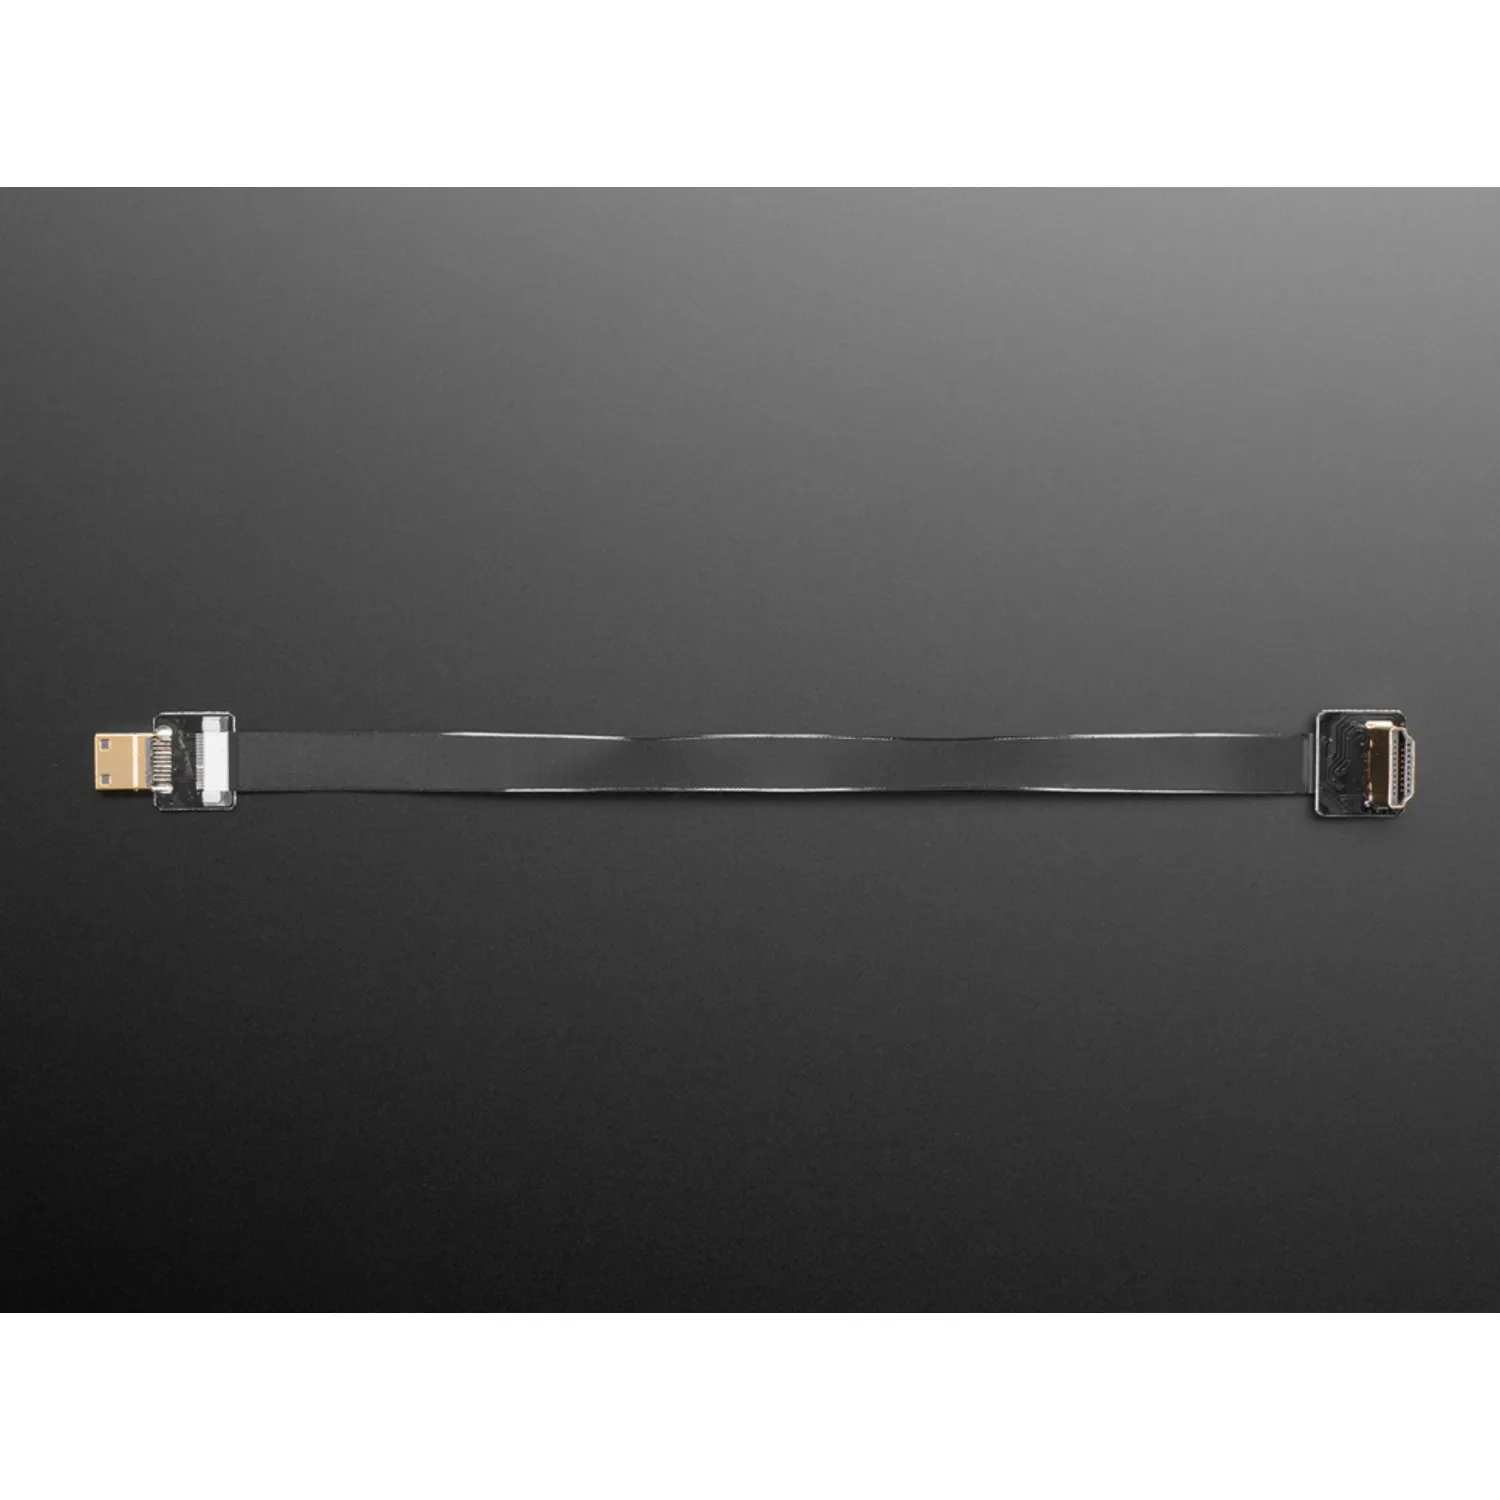 Photo of DIY HDMI Cable Parts - Straight Mini HDMI Plug Adapter